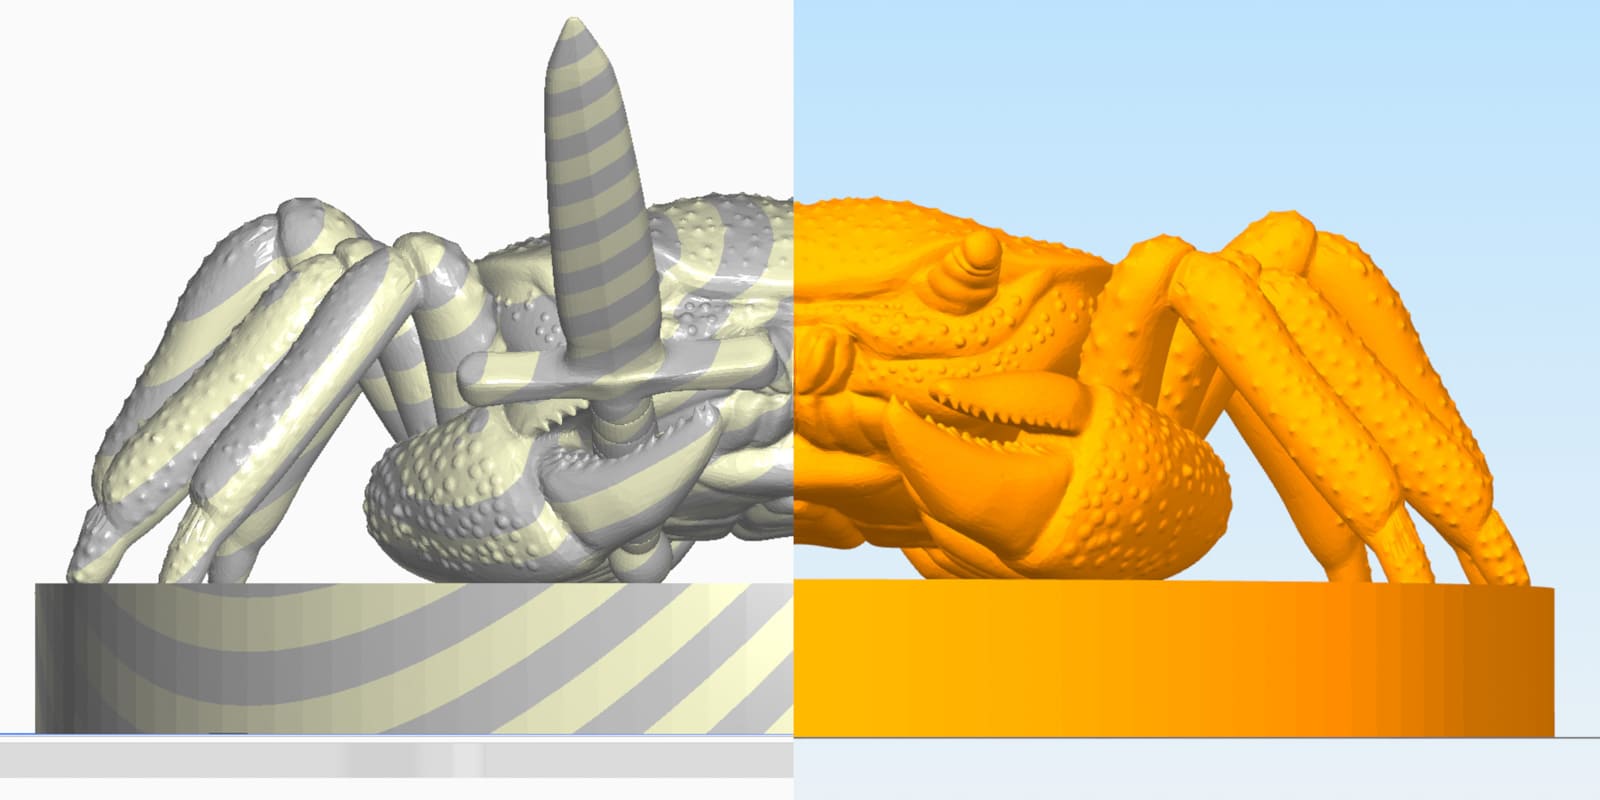 Comparing Cura vs Simplify3D slicing software